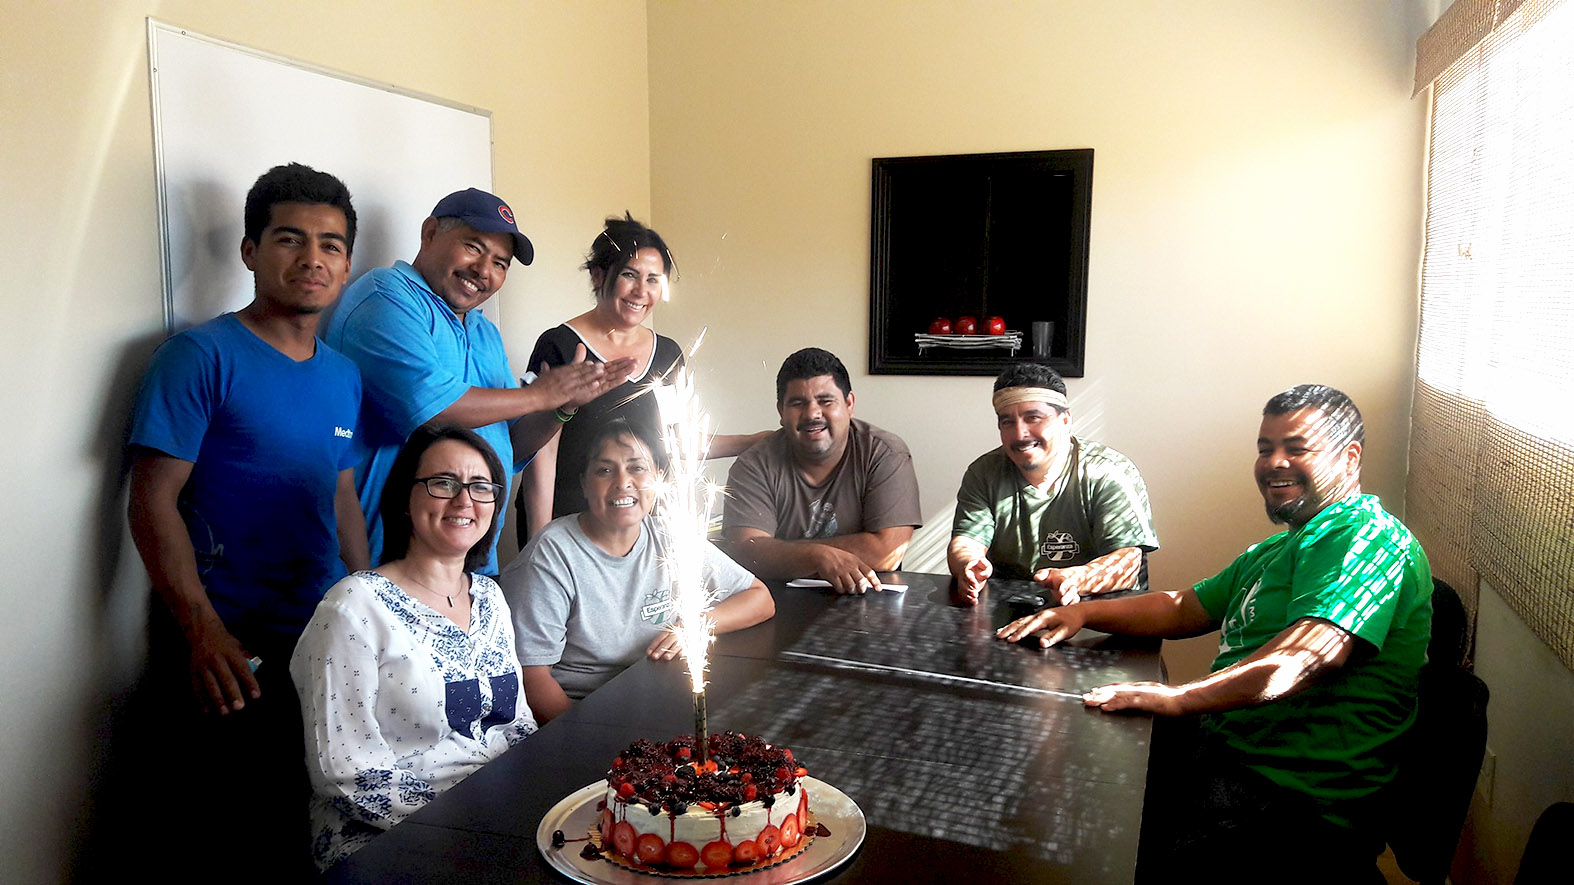 The Tijuana Esperanza team celebrates around a birthday cake with a firework candle in a cake